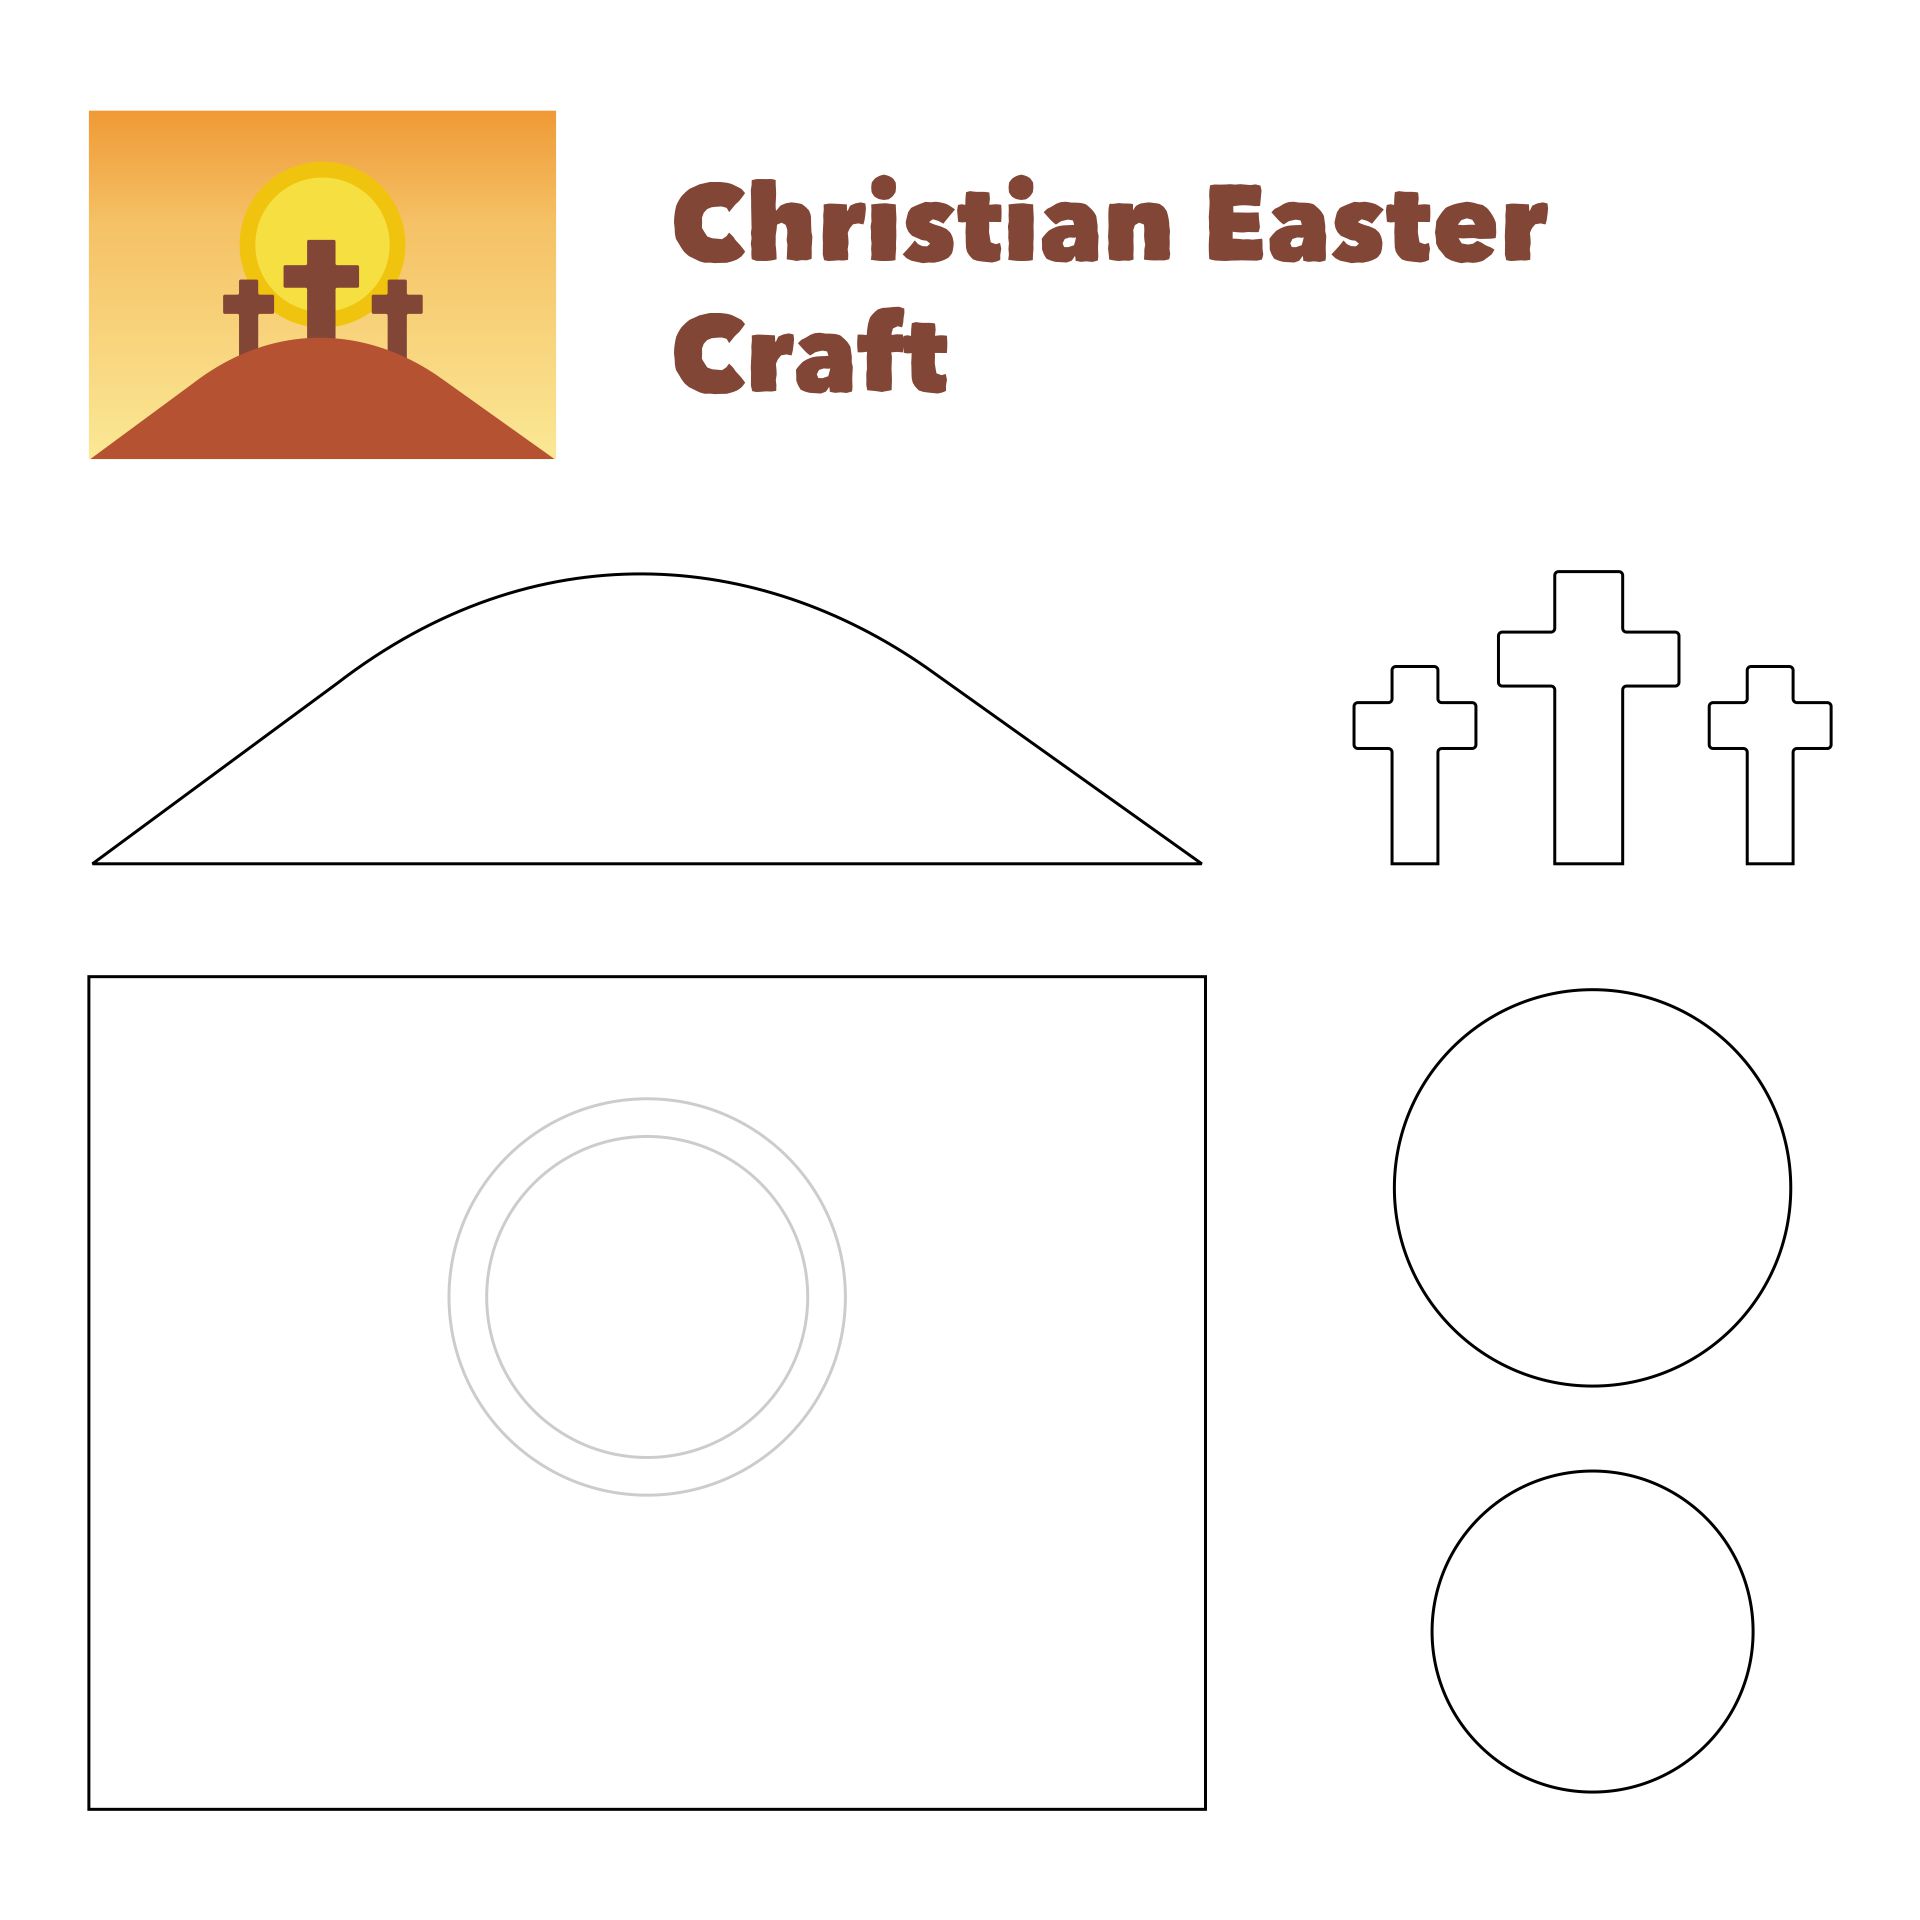 Christian Easter Craft